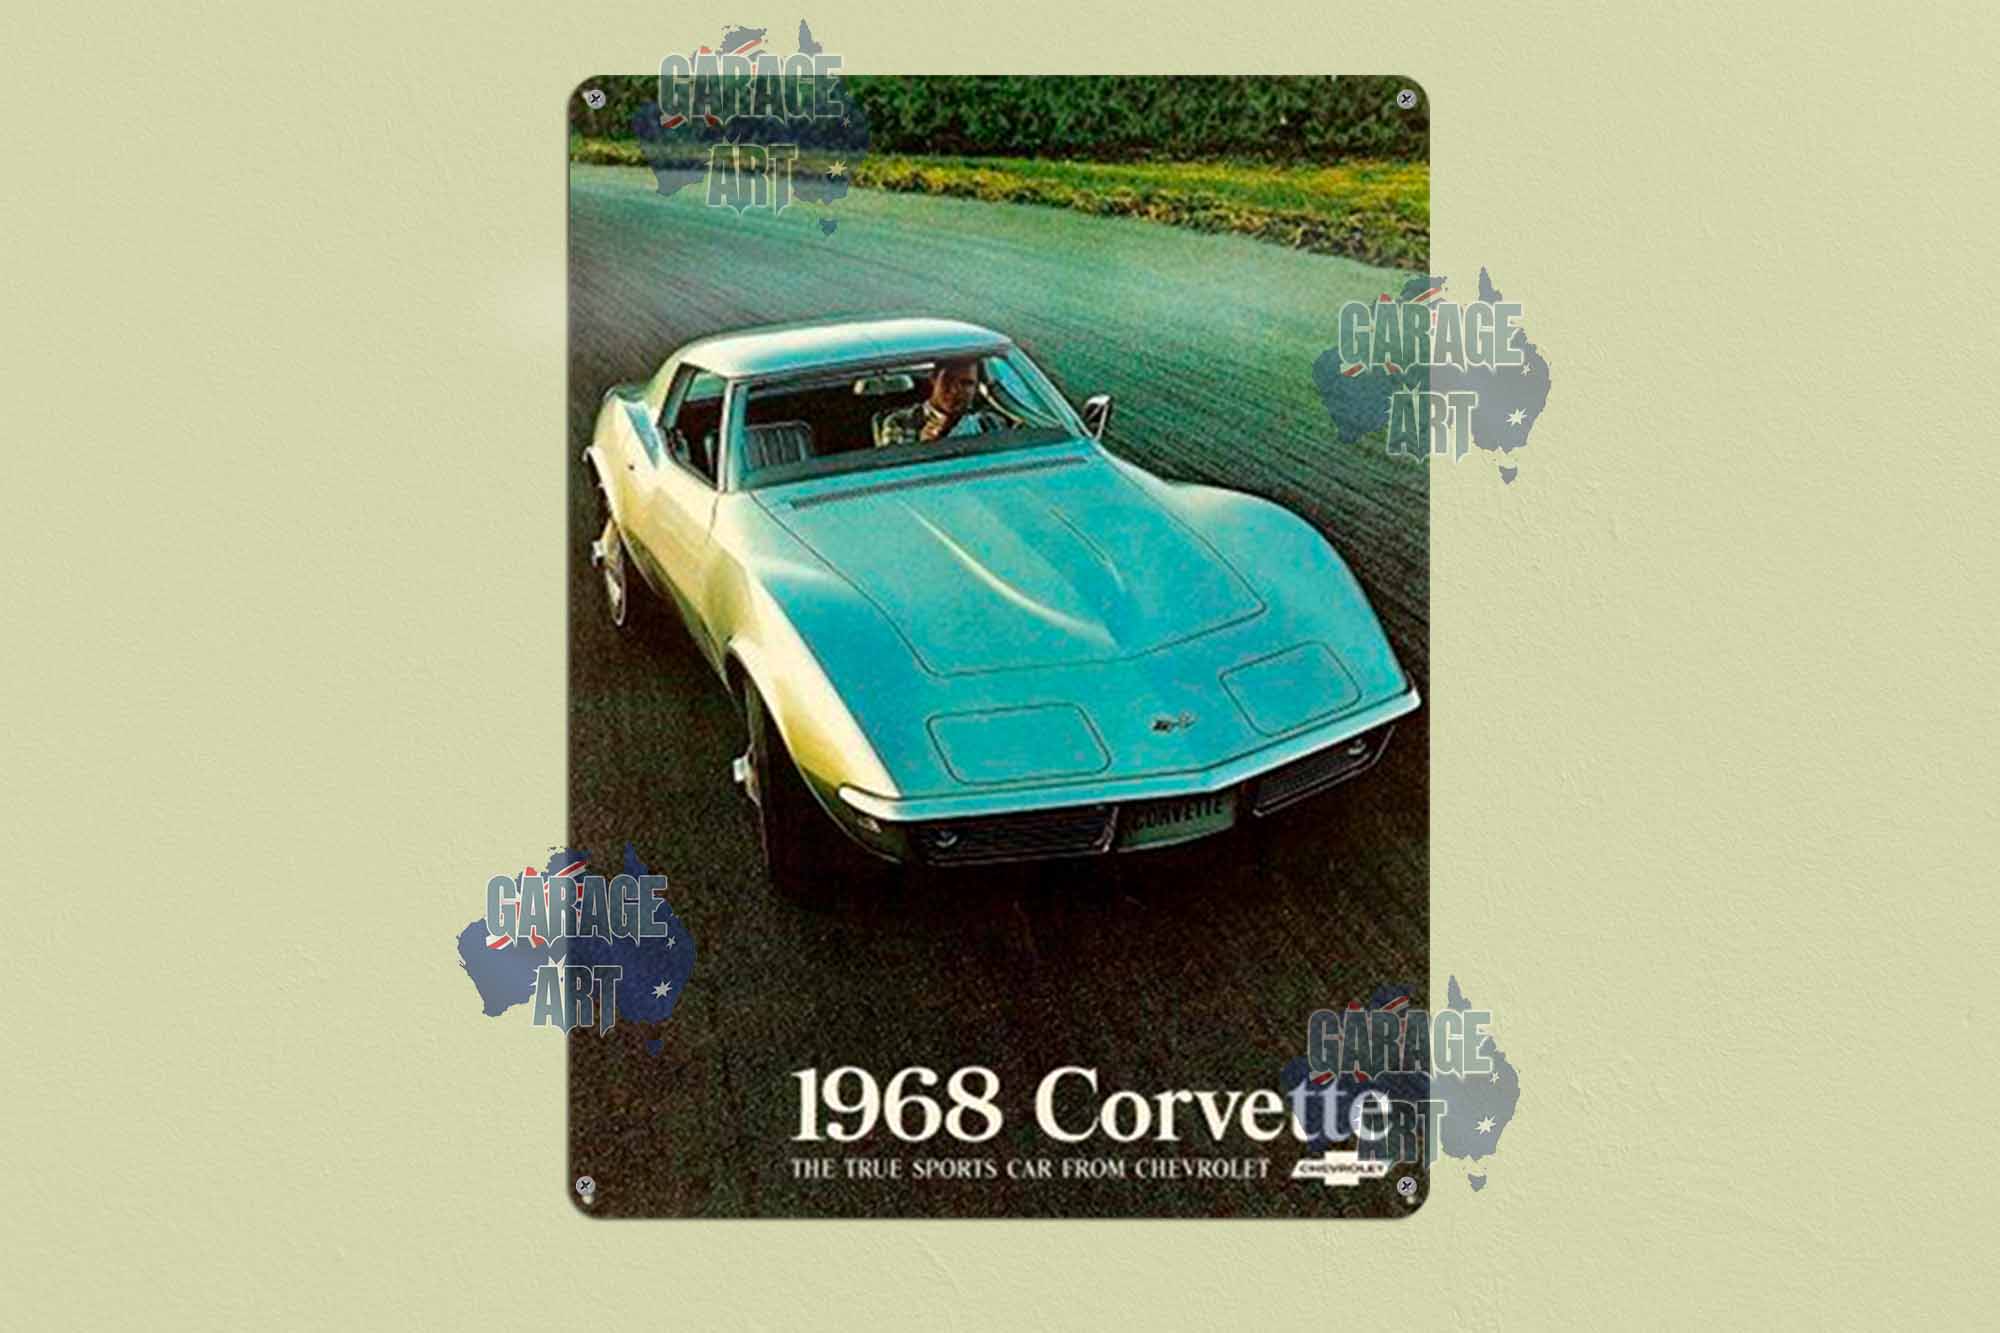 1968 Corvette Tin Sign freeshipping - garageartaustralia